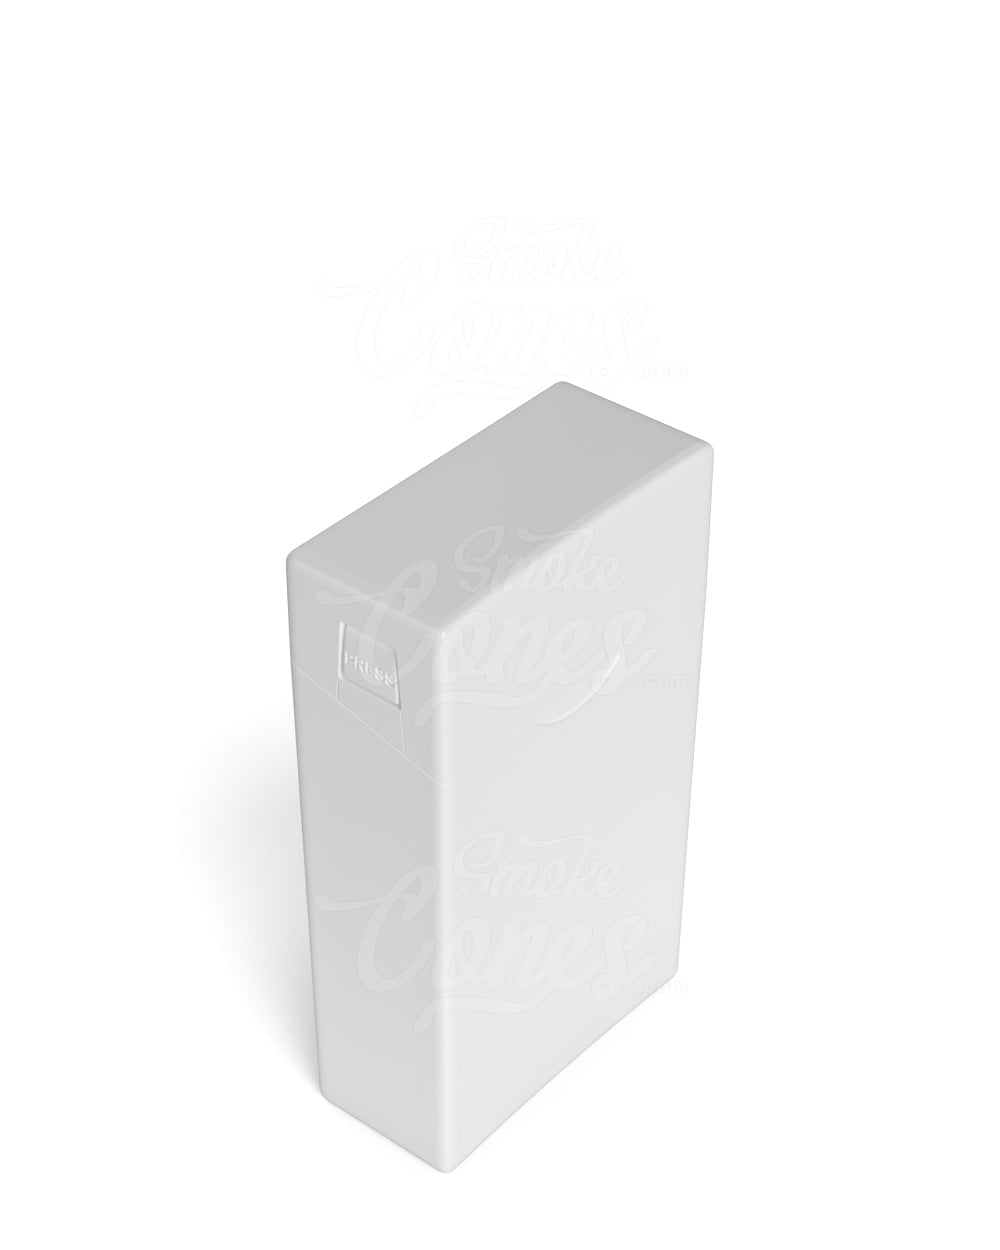 Premium 84 MM Clear Pre Roll Packaging Box - Pinch N Flip (130 qty.)